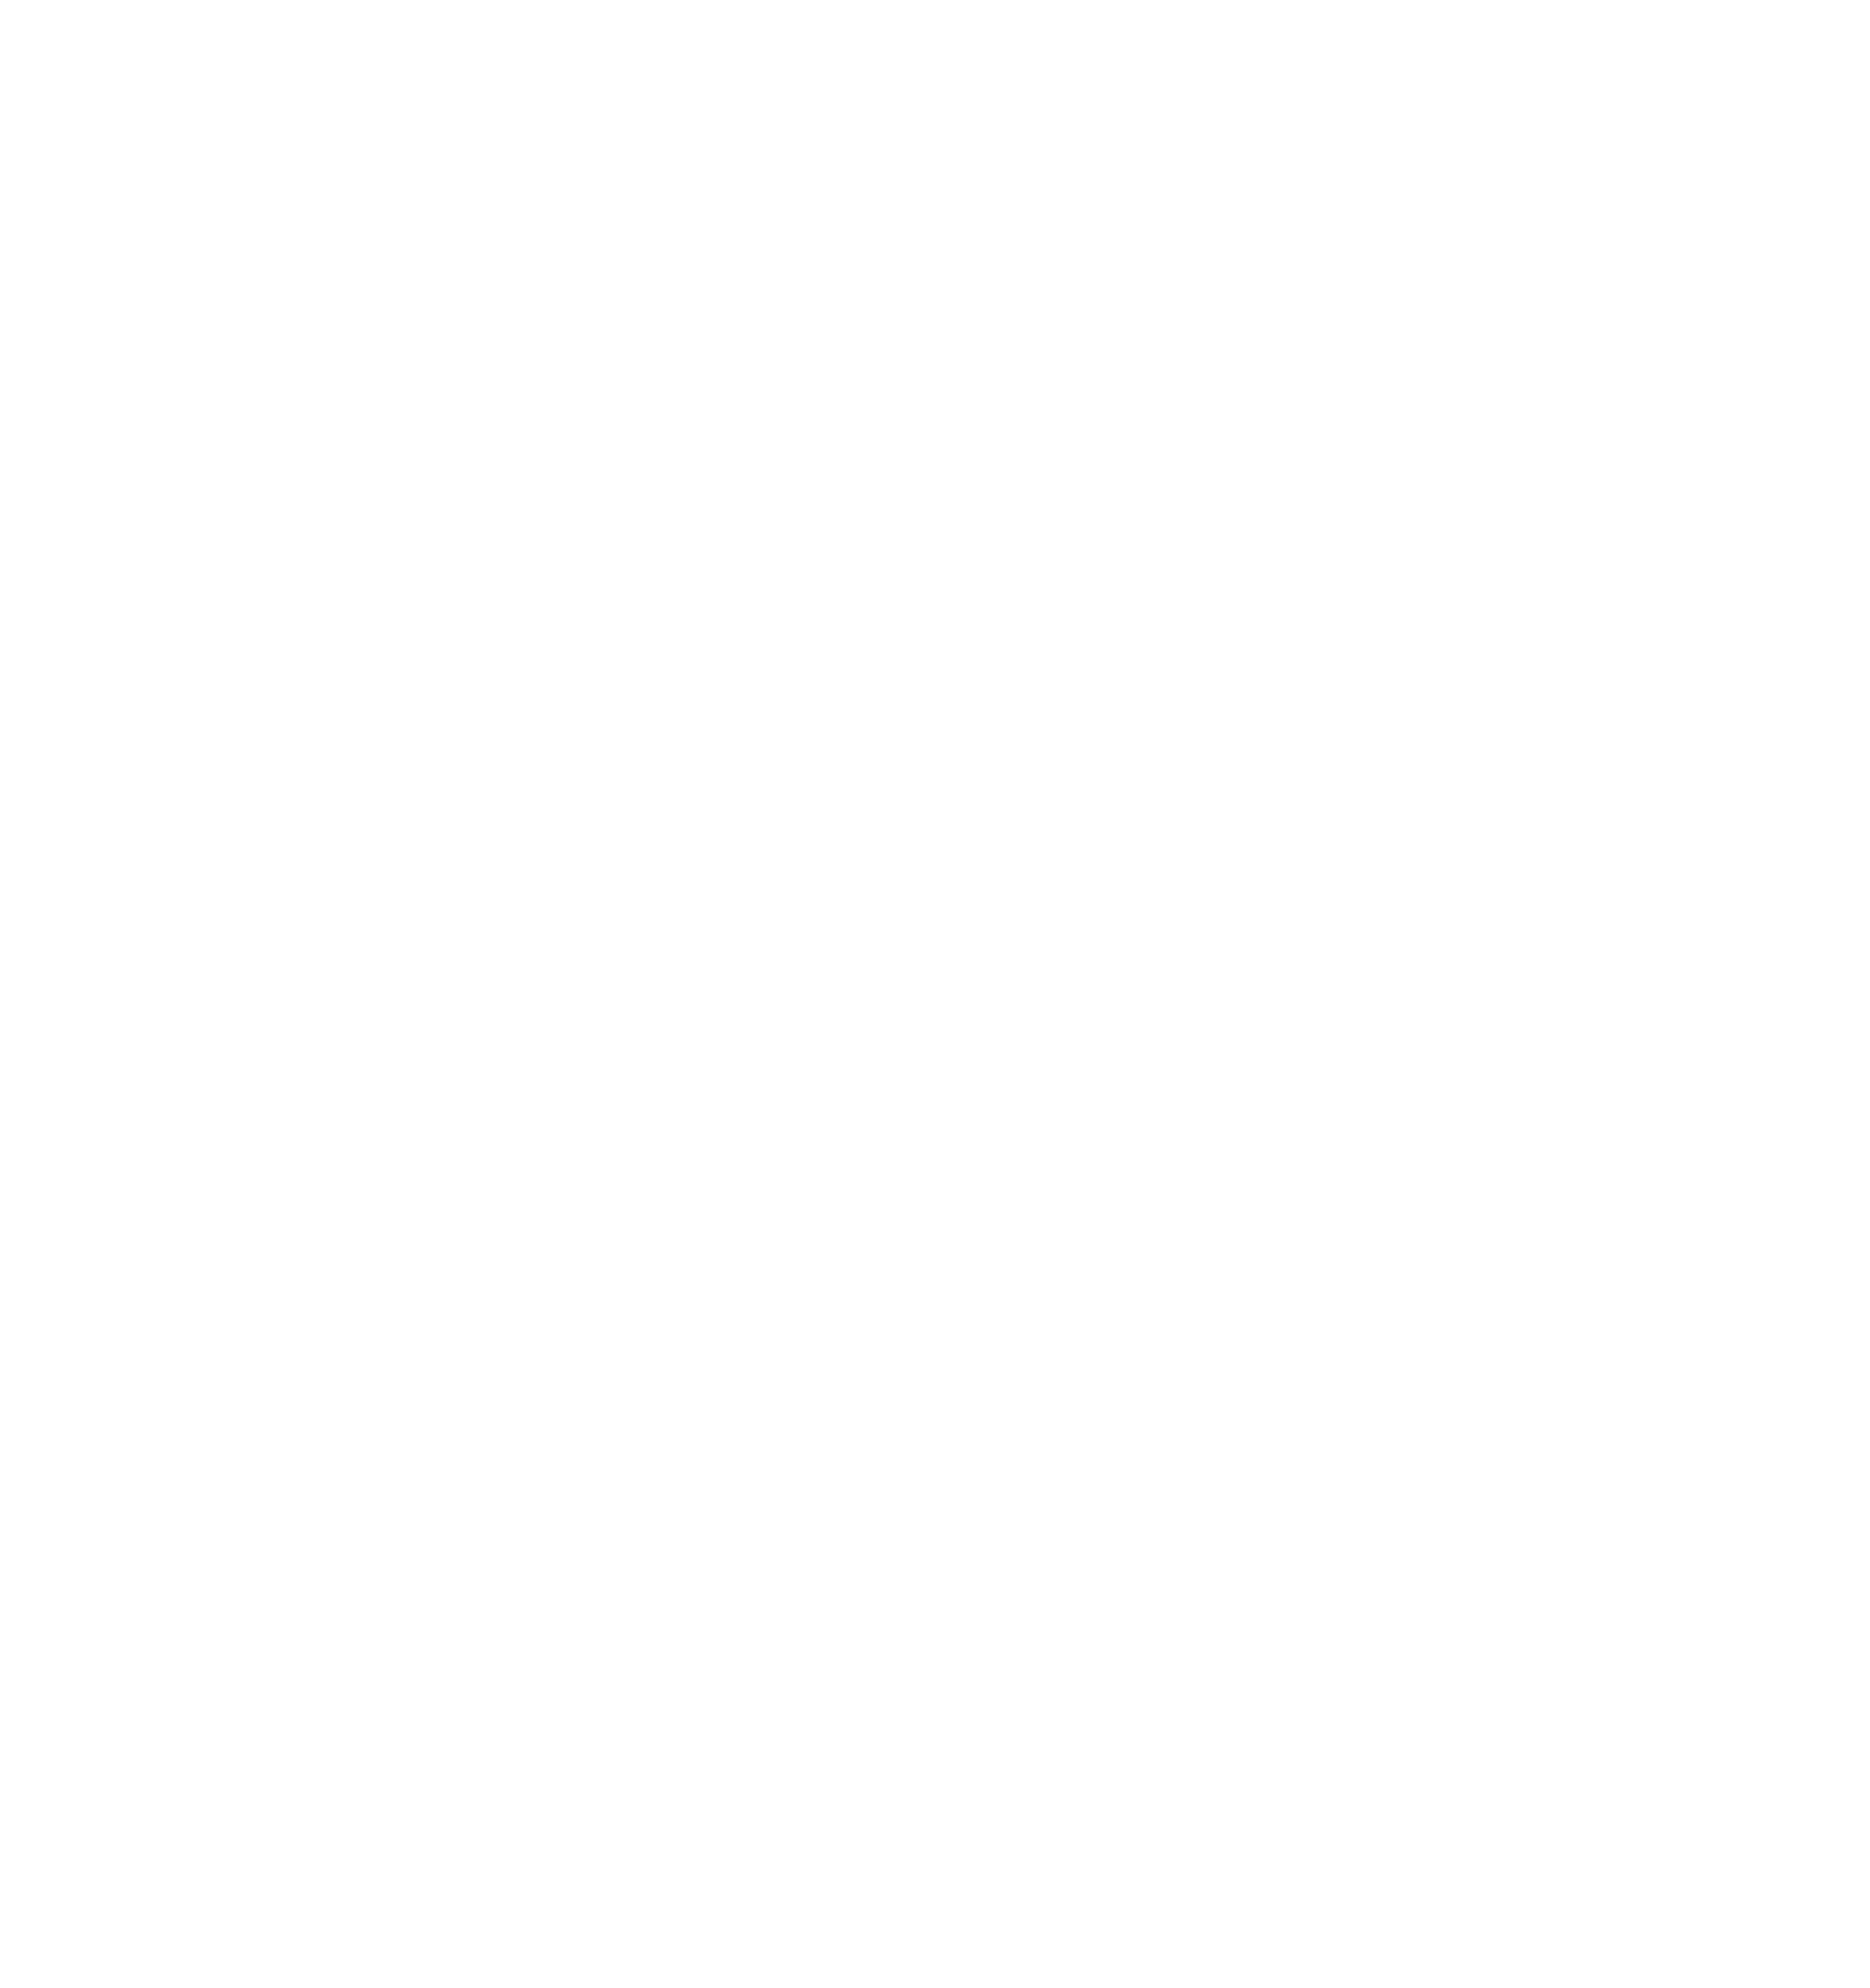 THEKER logo